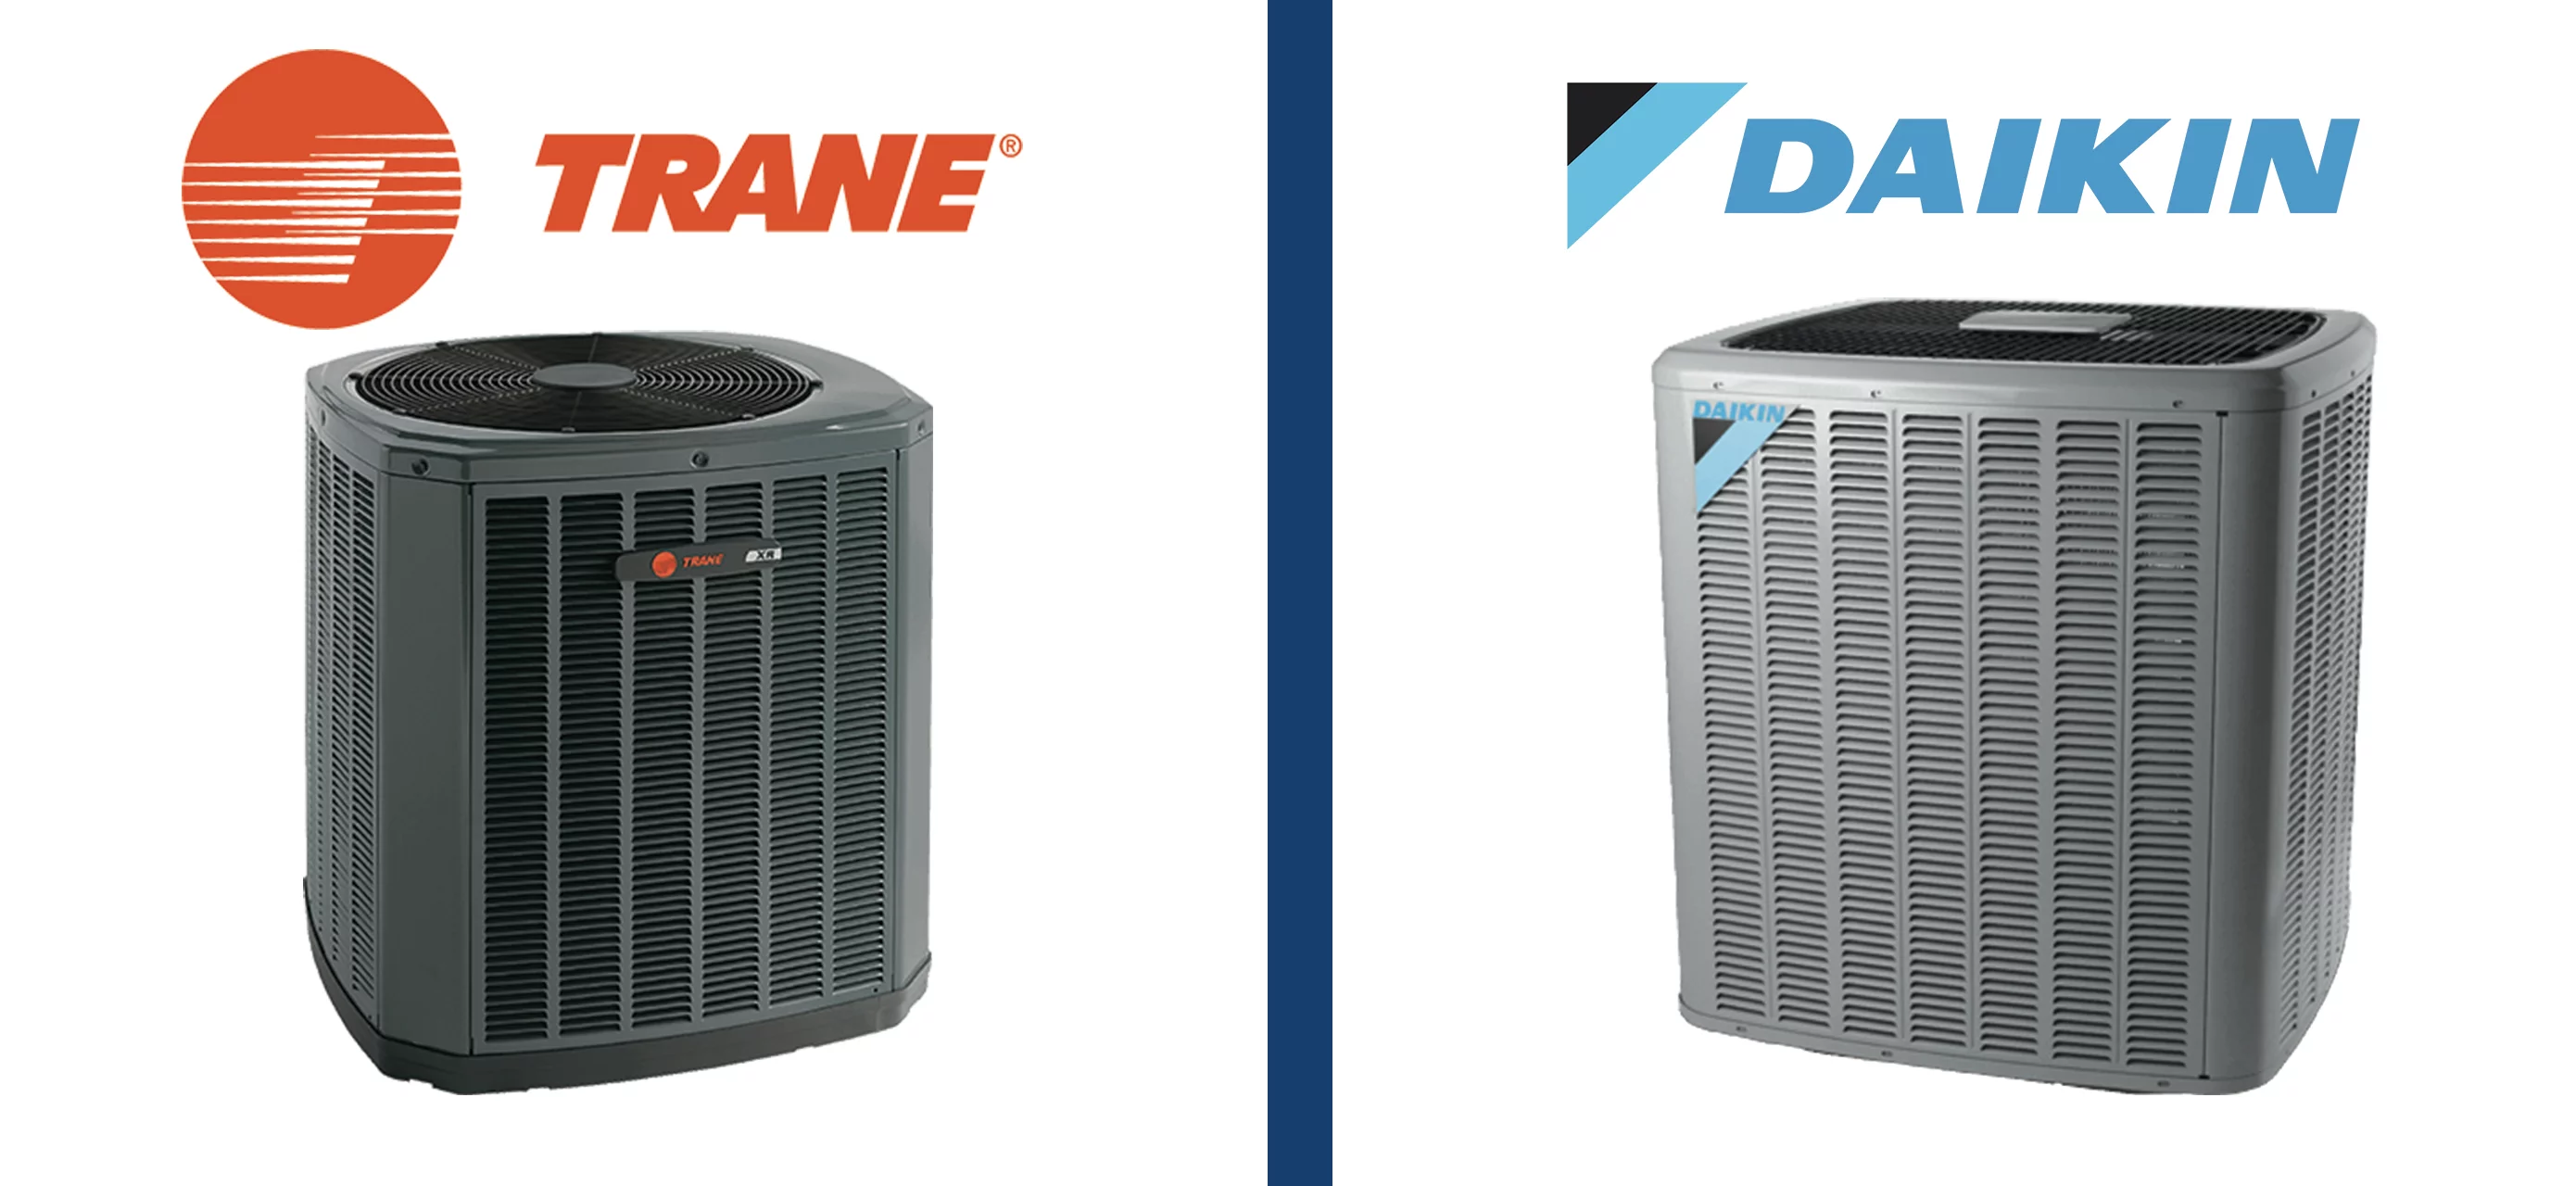 trane vs daikin air conditioner